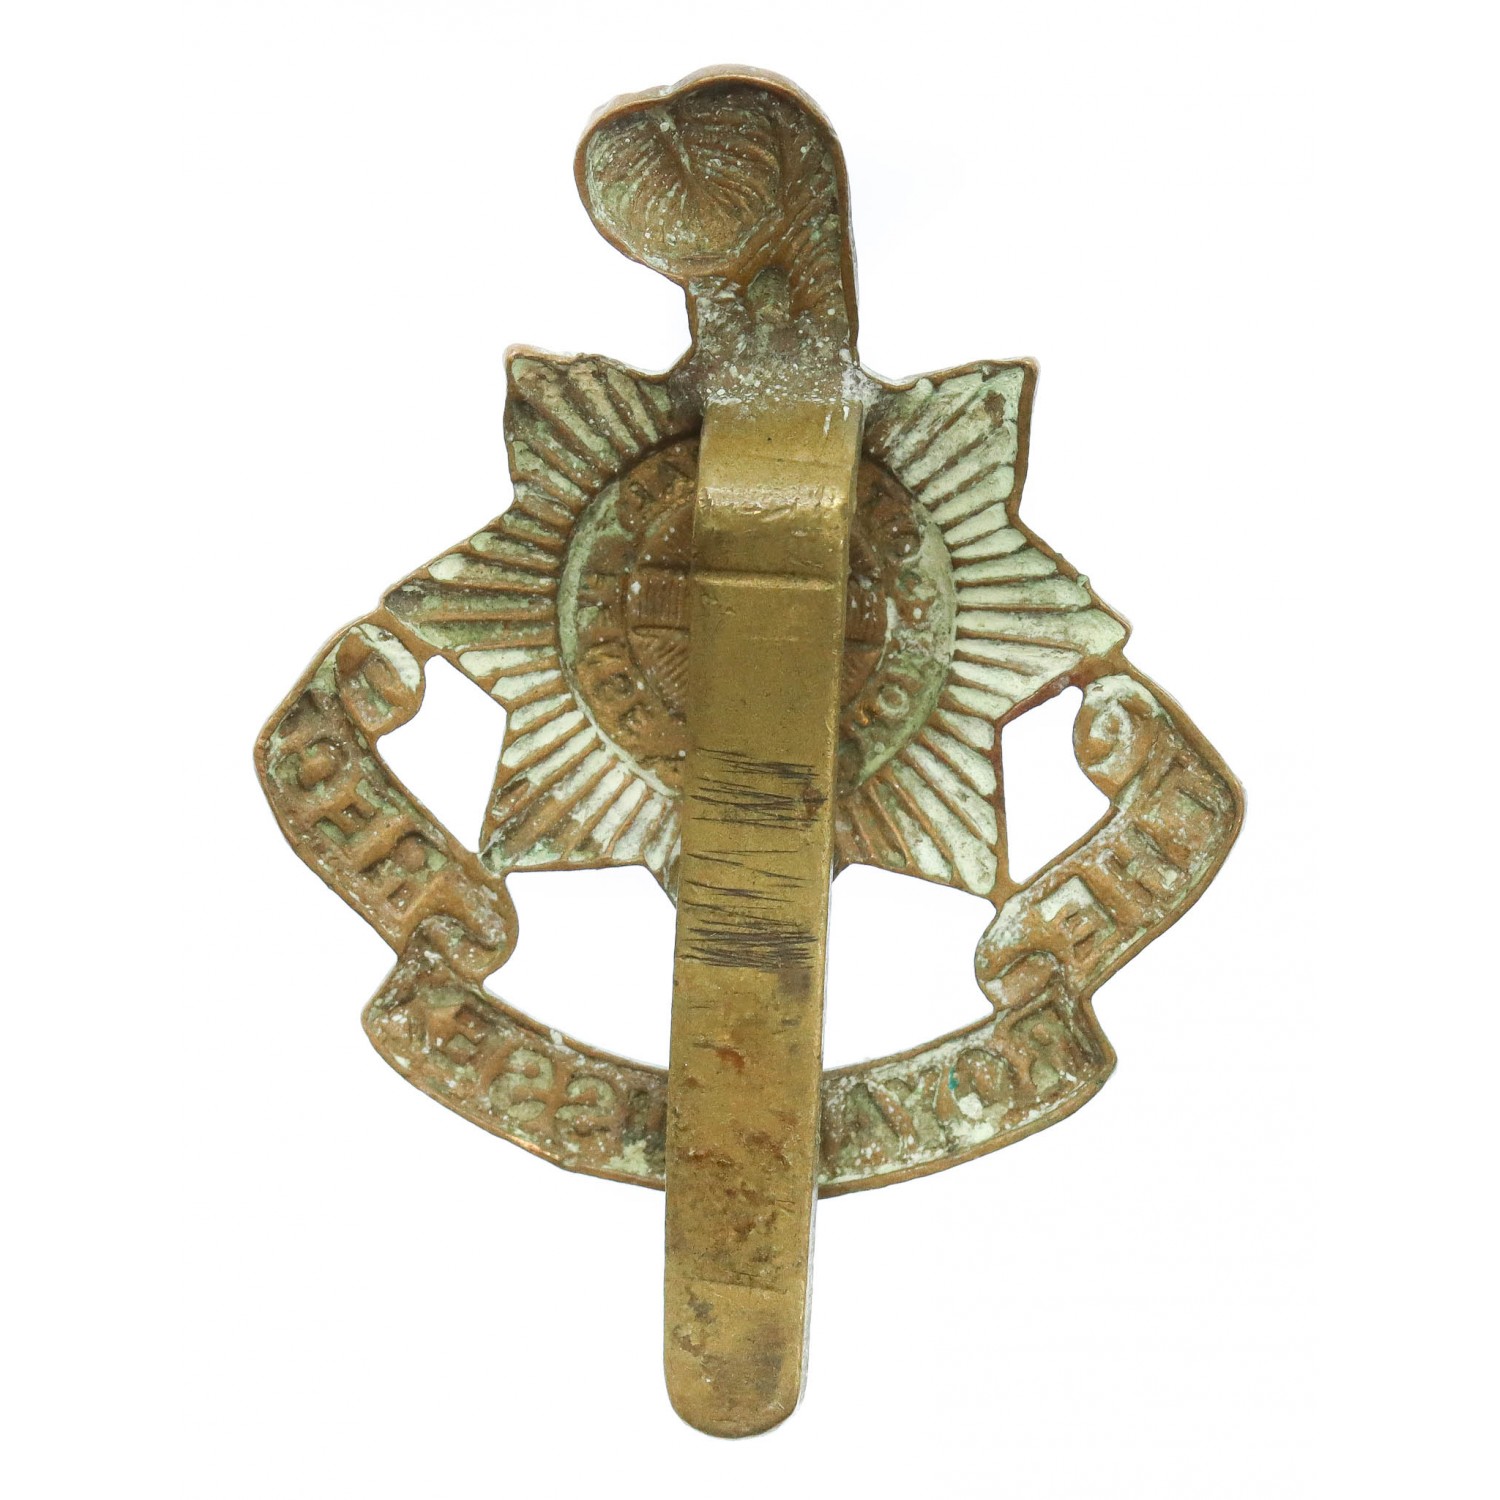 Royal Sussex Regiment WWI All Brass Economy Cap Badge